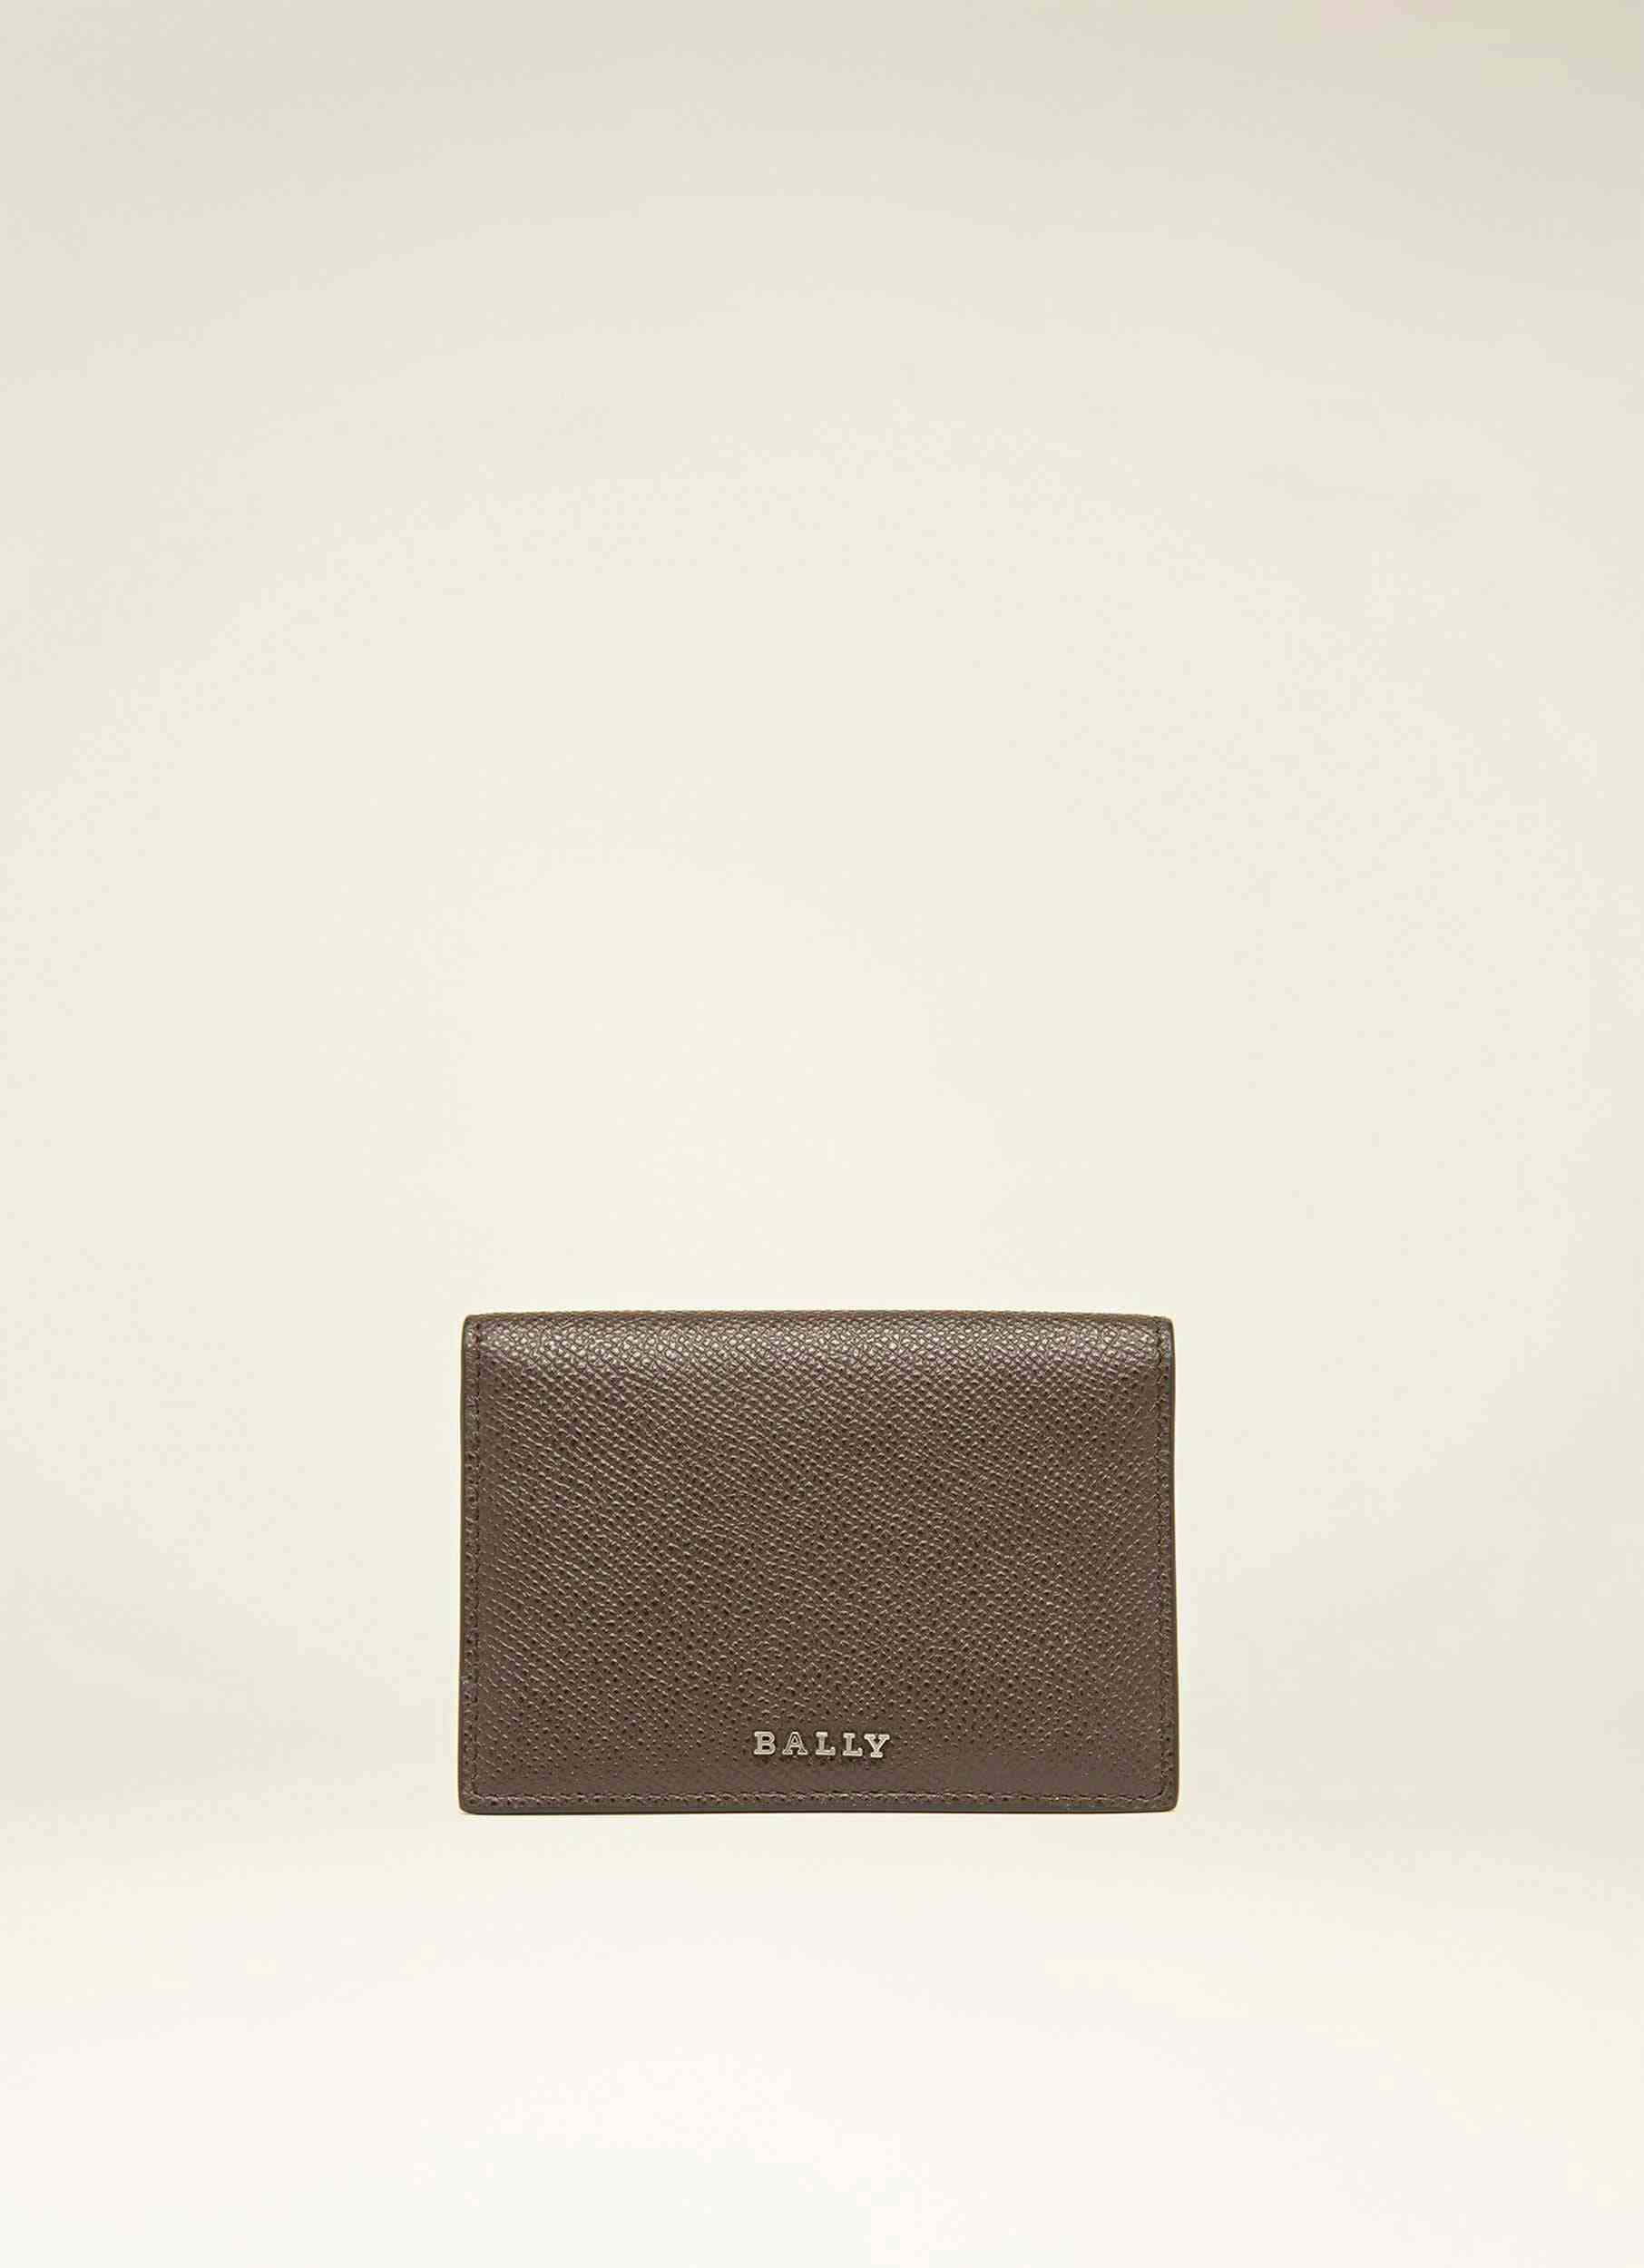 BALLY ESSENCE Leather Card Holder In Ebony Brown - Men's - Bally